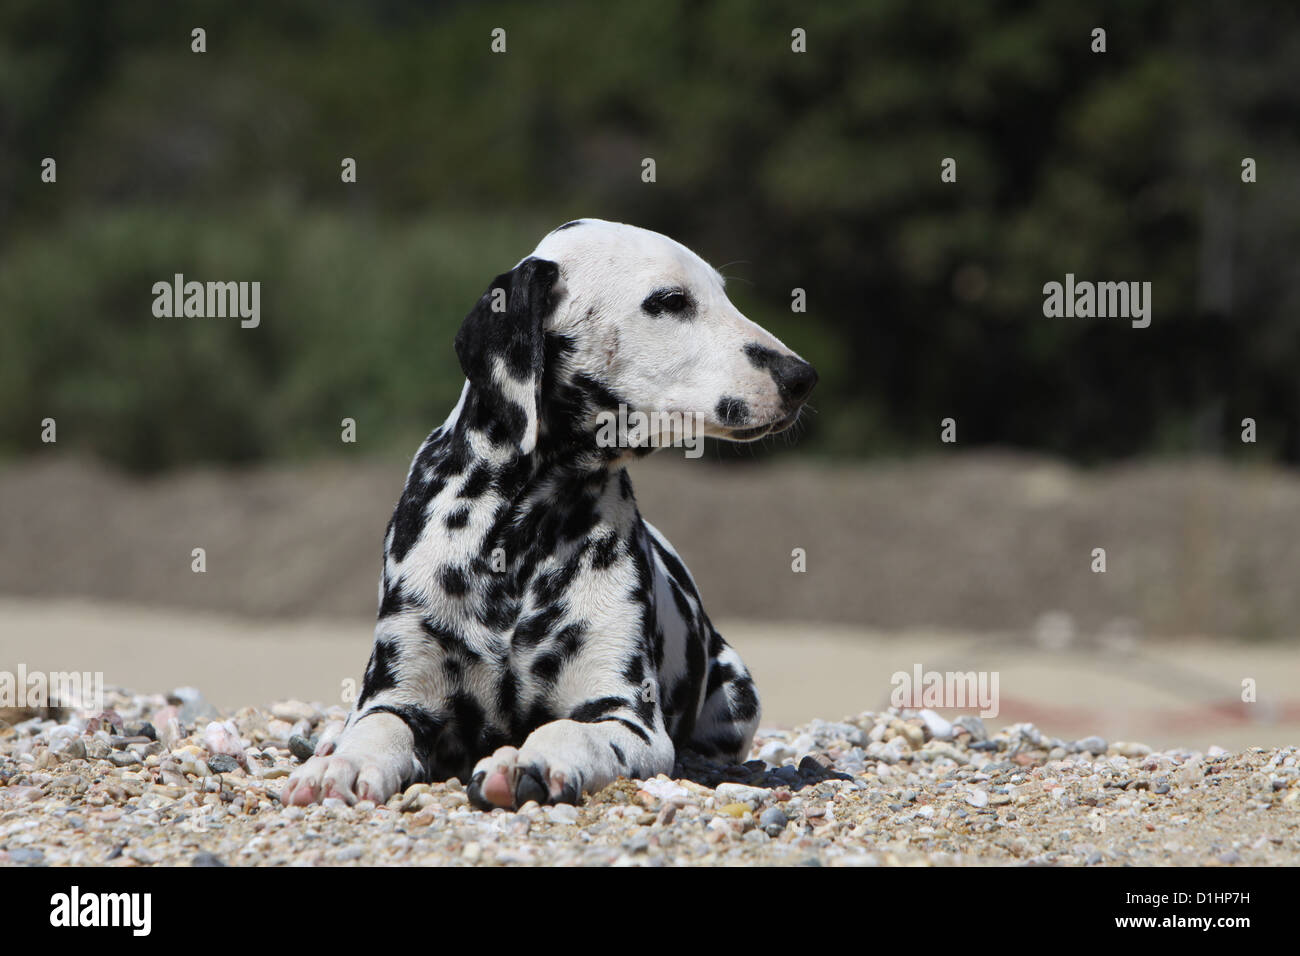 Dog Dalmatian / Dalmatiner / Dalmatien puppy lying on the ground Stock Photo